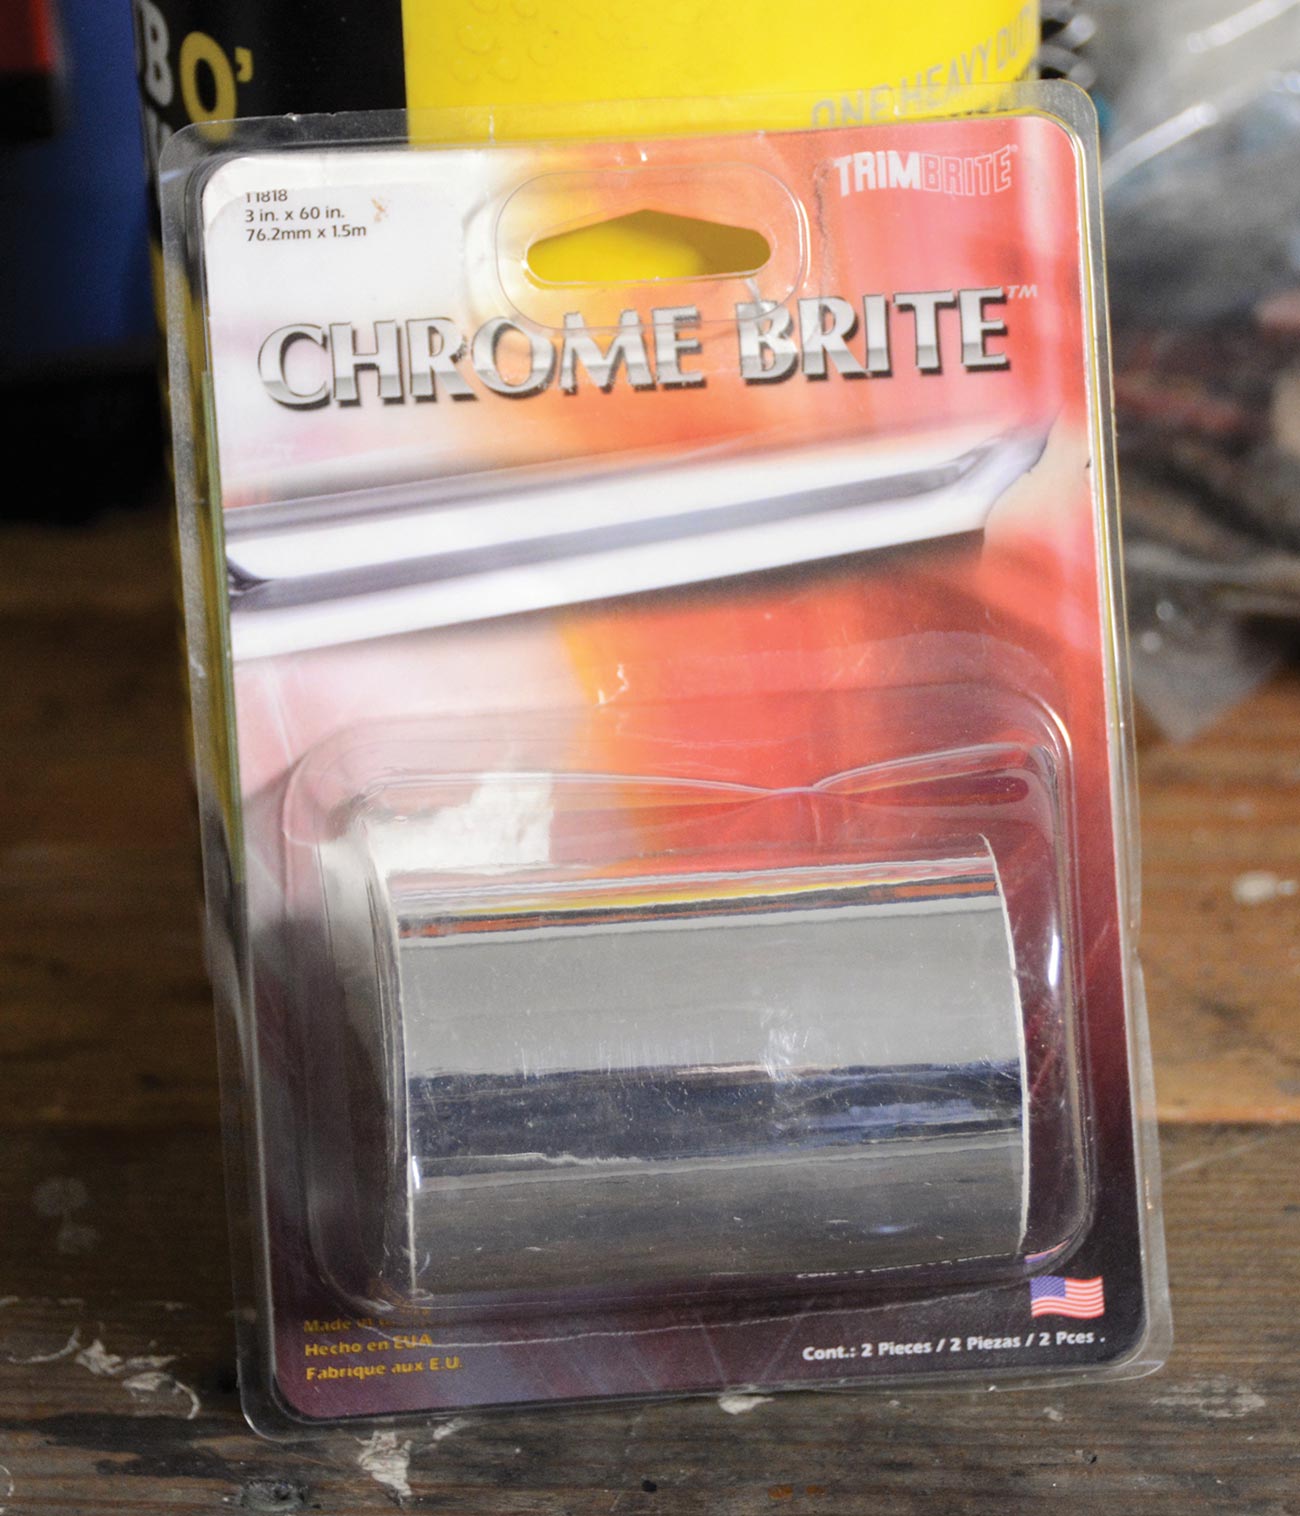 container of Trimbrite brand of chrome bright tape